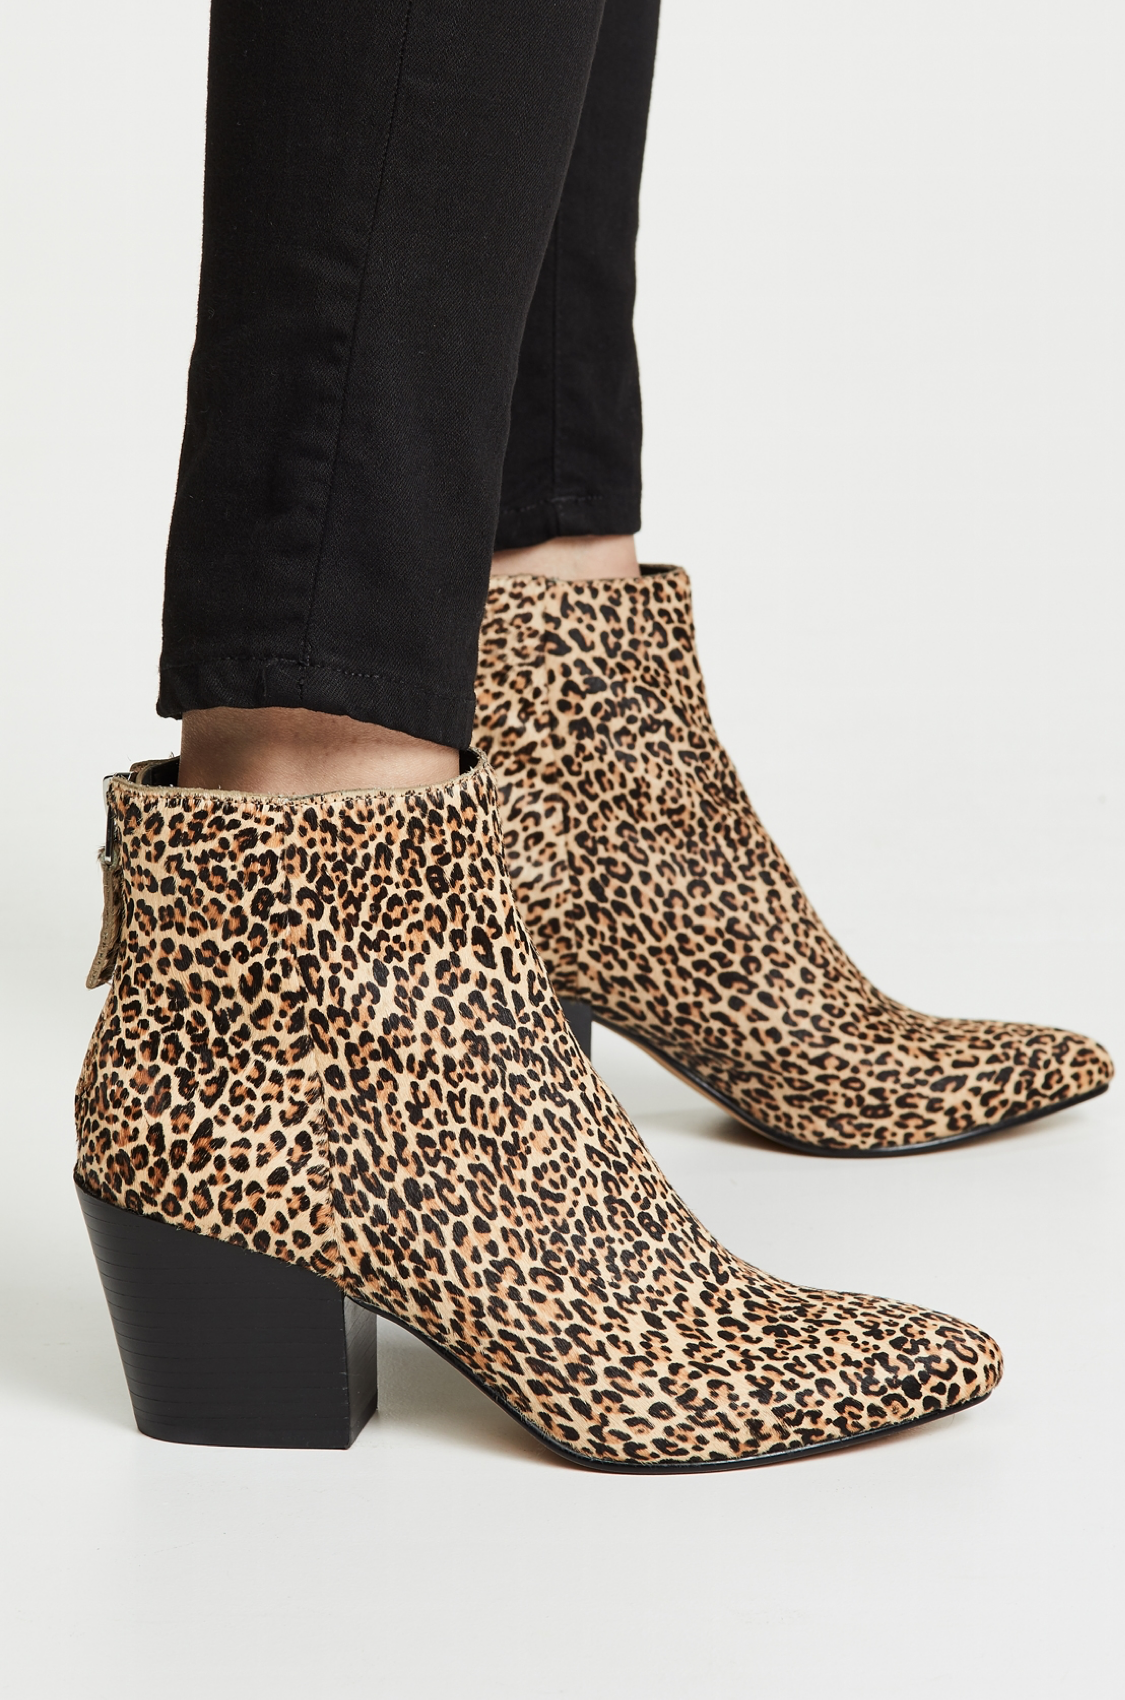 dolce vita leopard boots